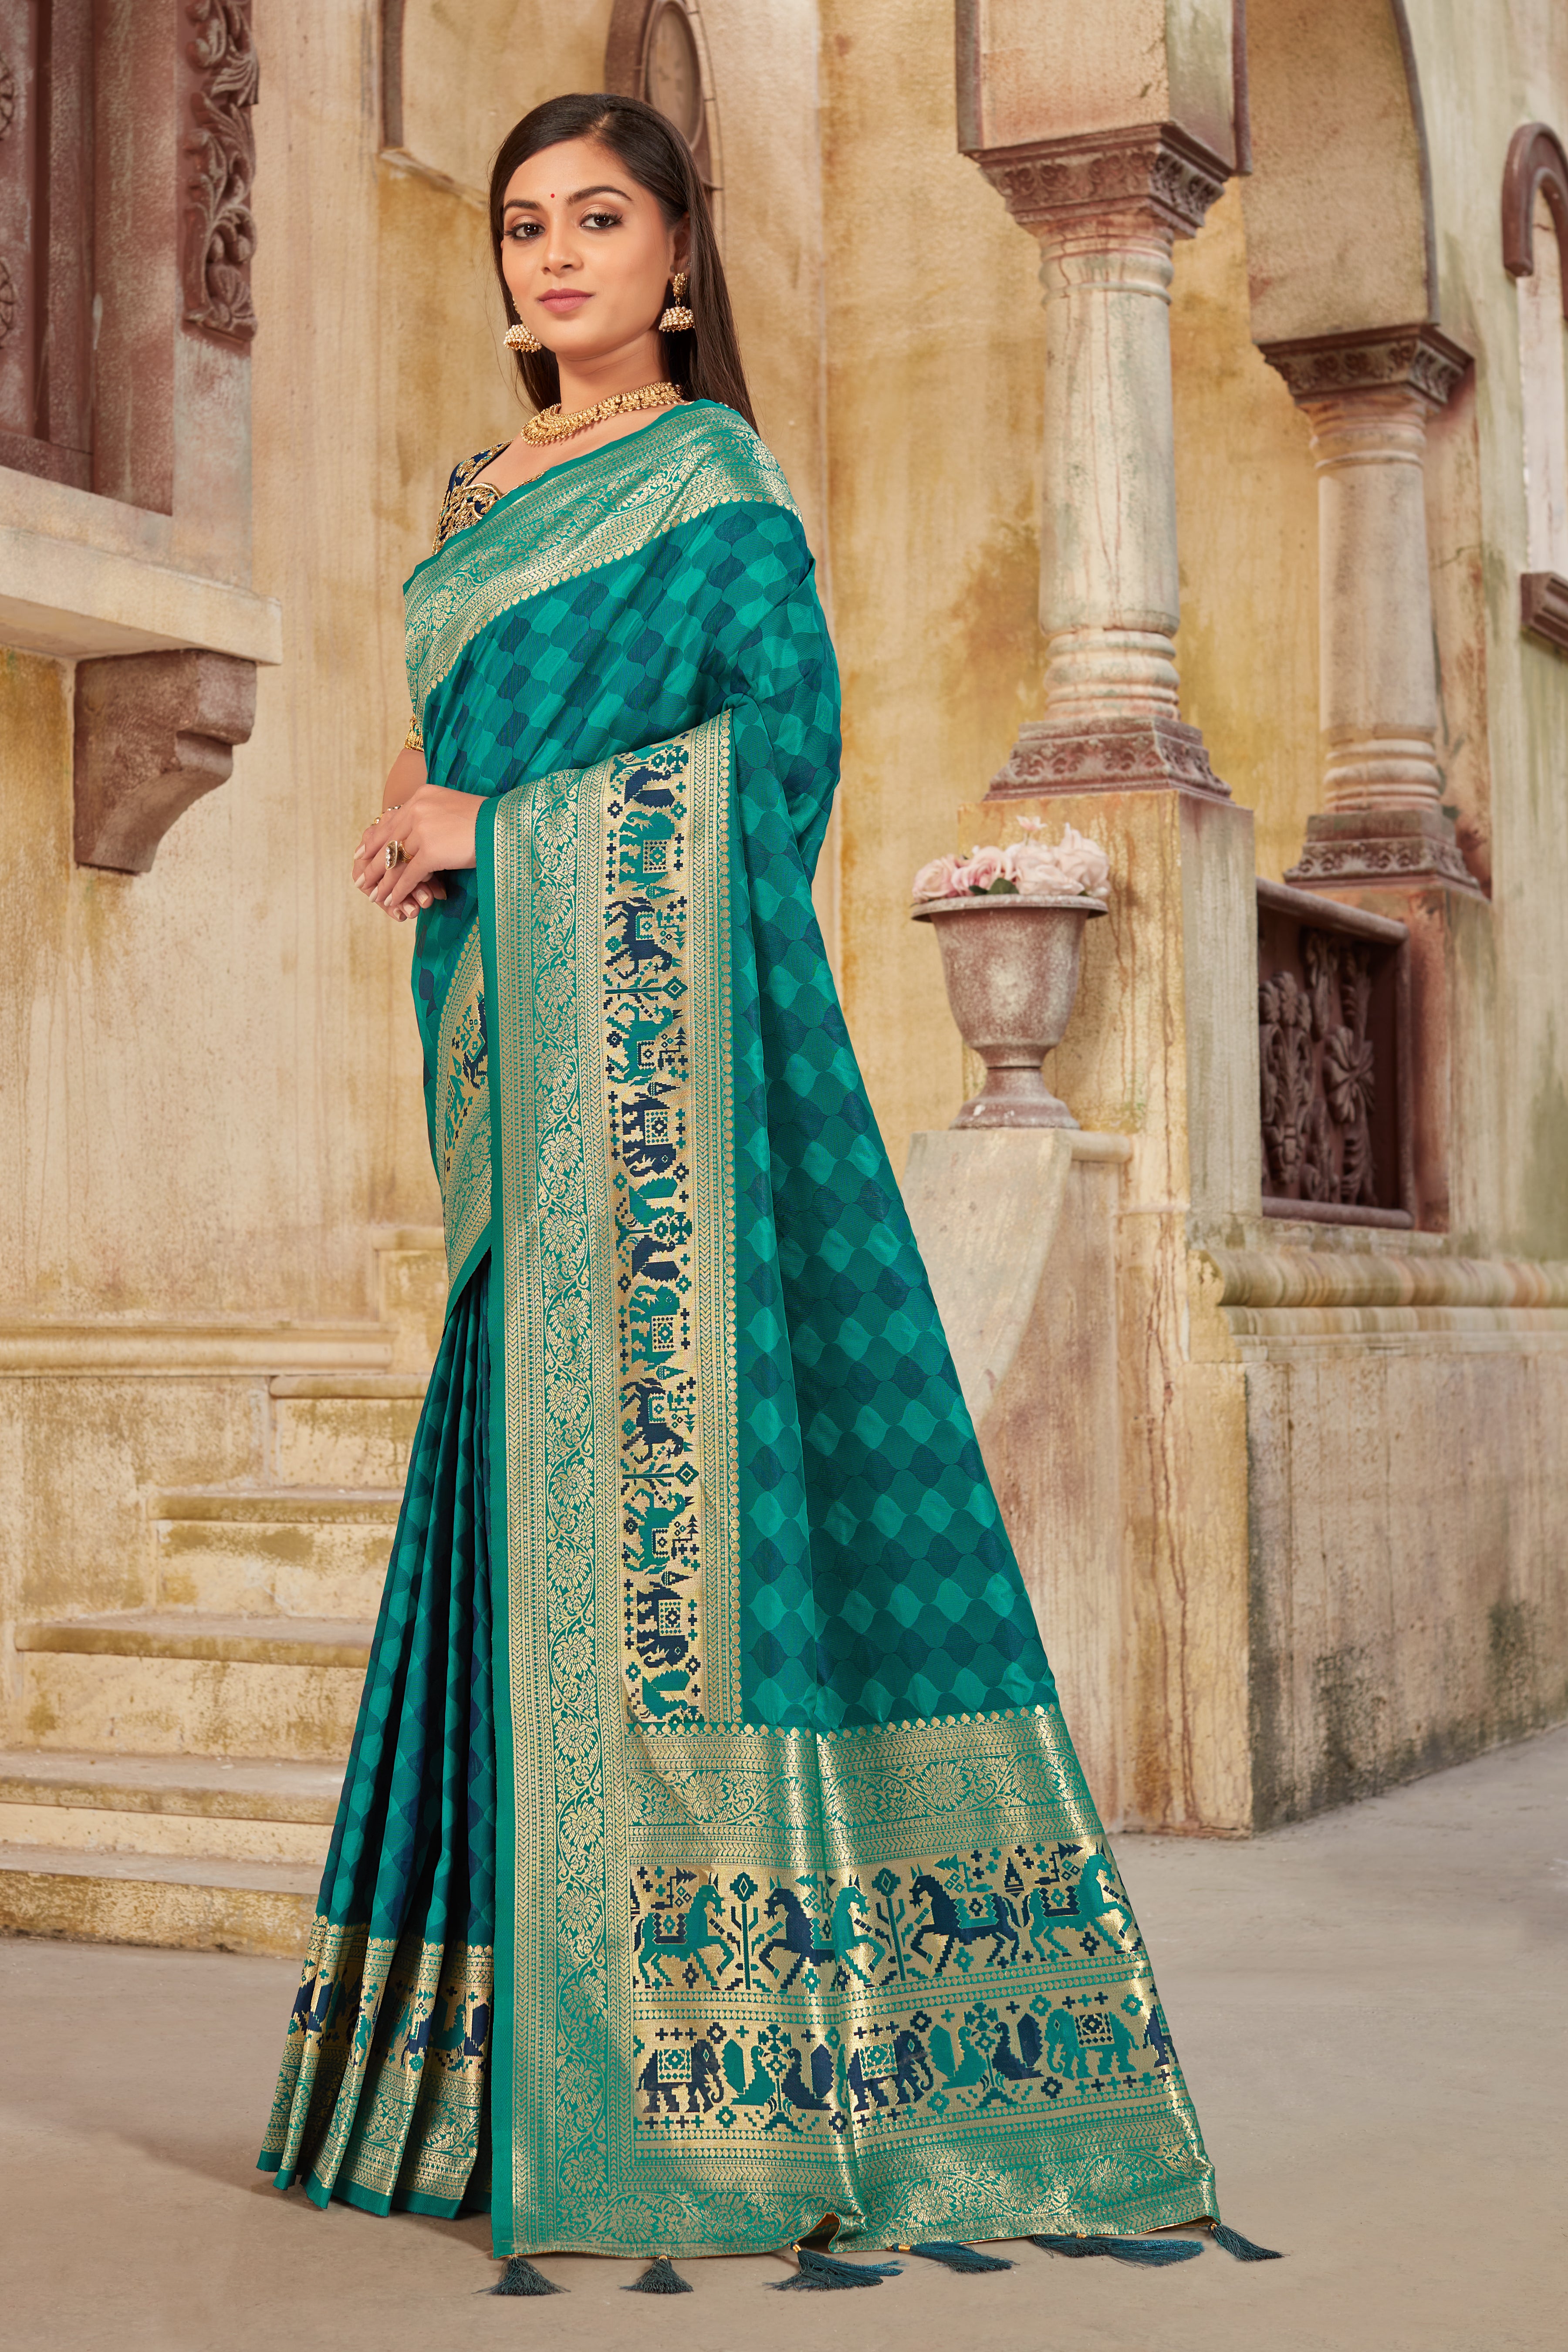 Women's Turquoise and Teal Banarasi Silk Classic Saree With Heavy Work Blouse - Monjolika